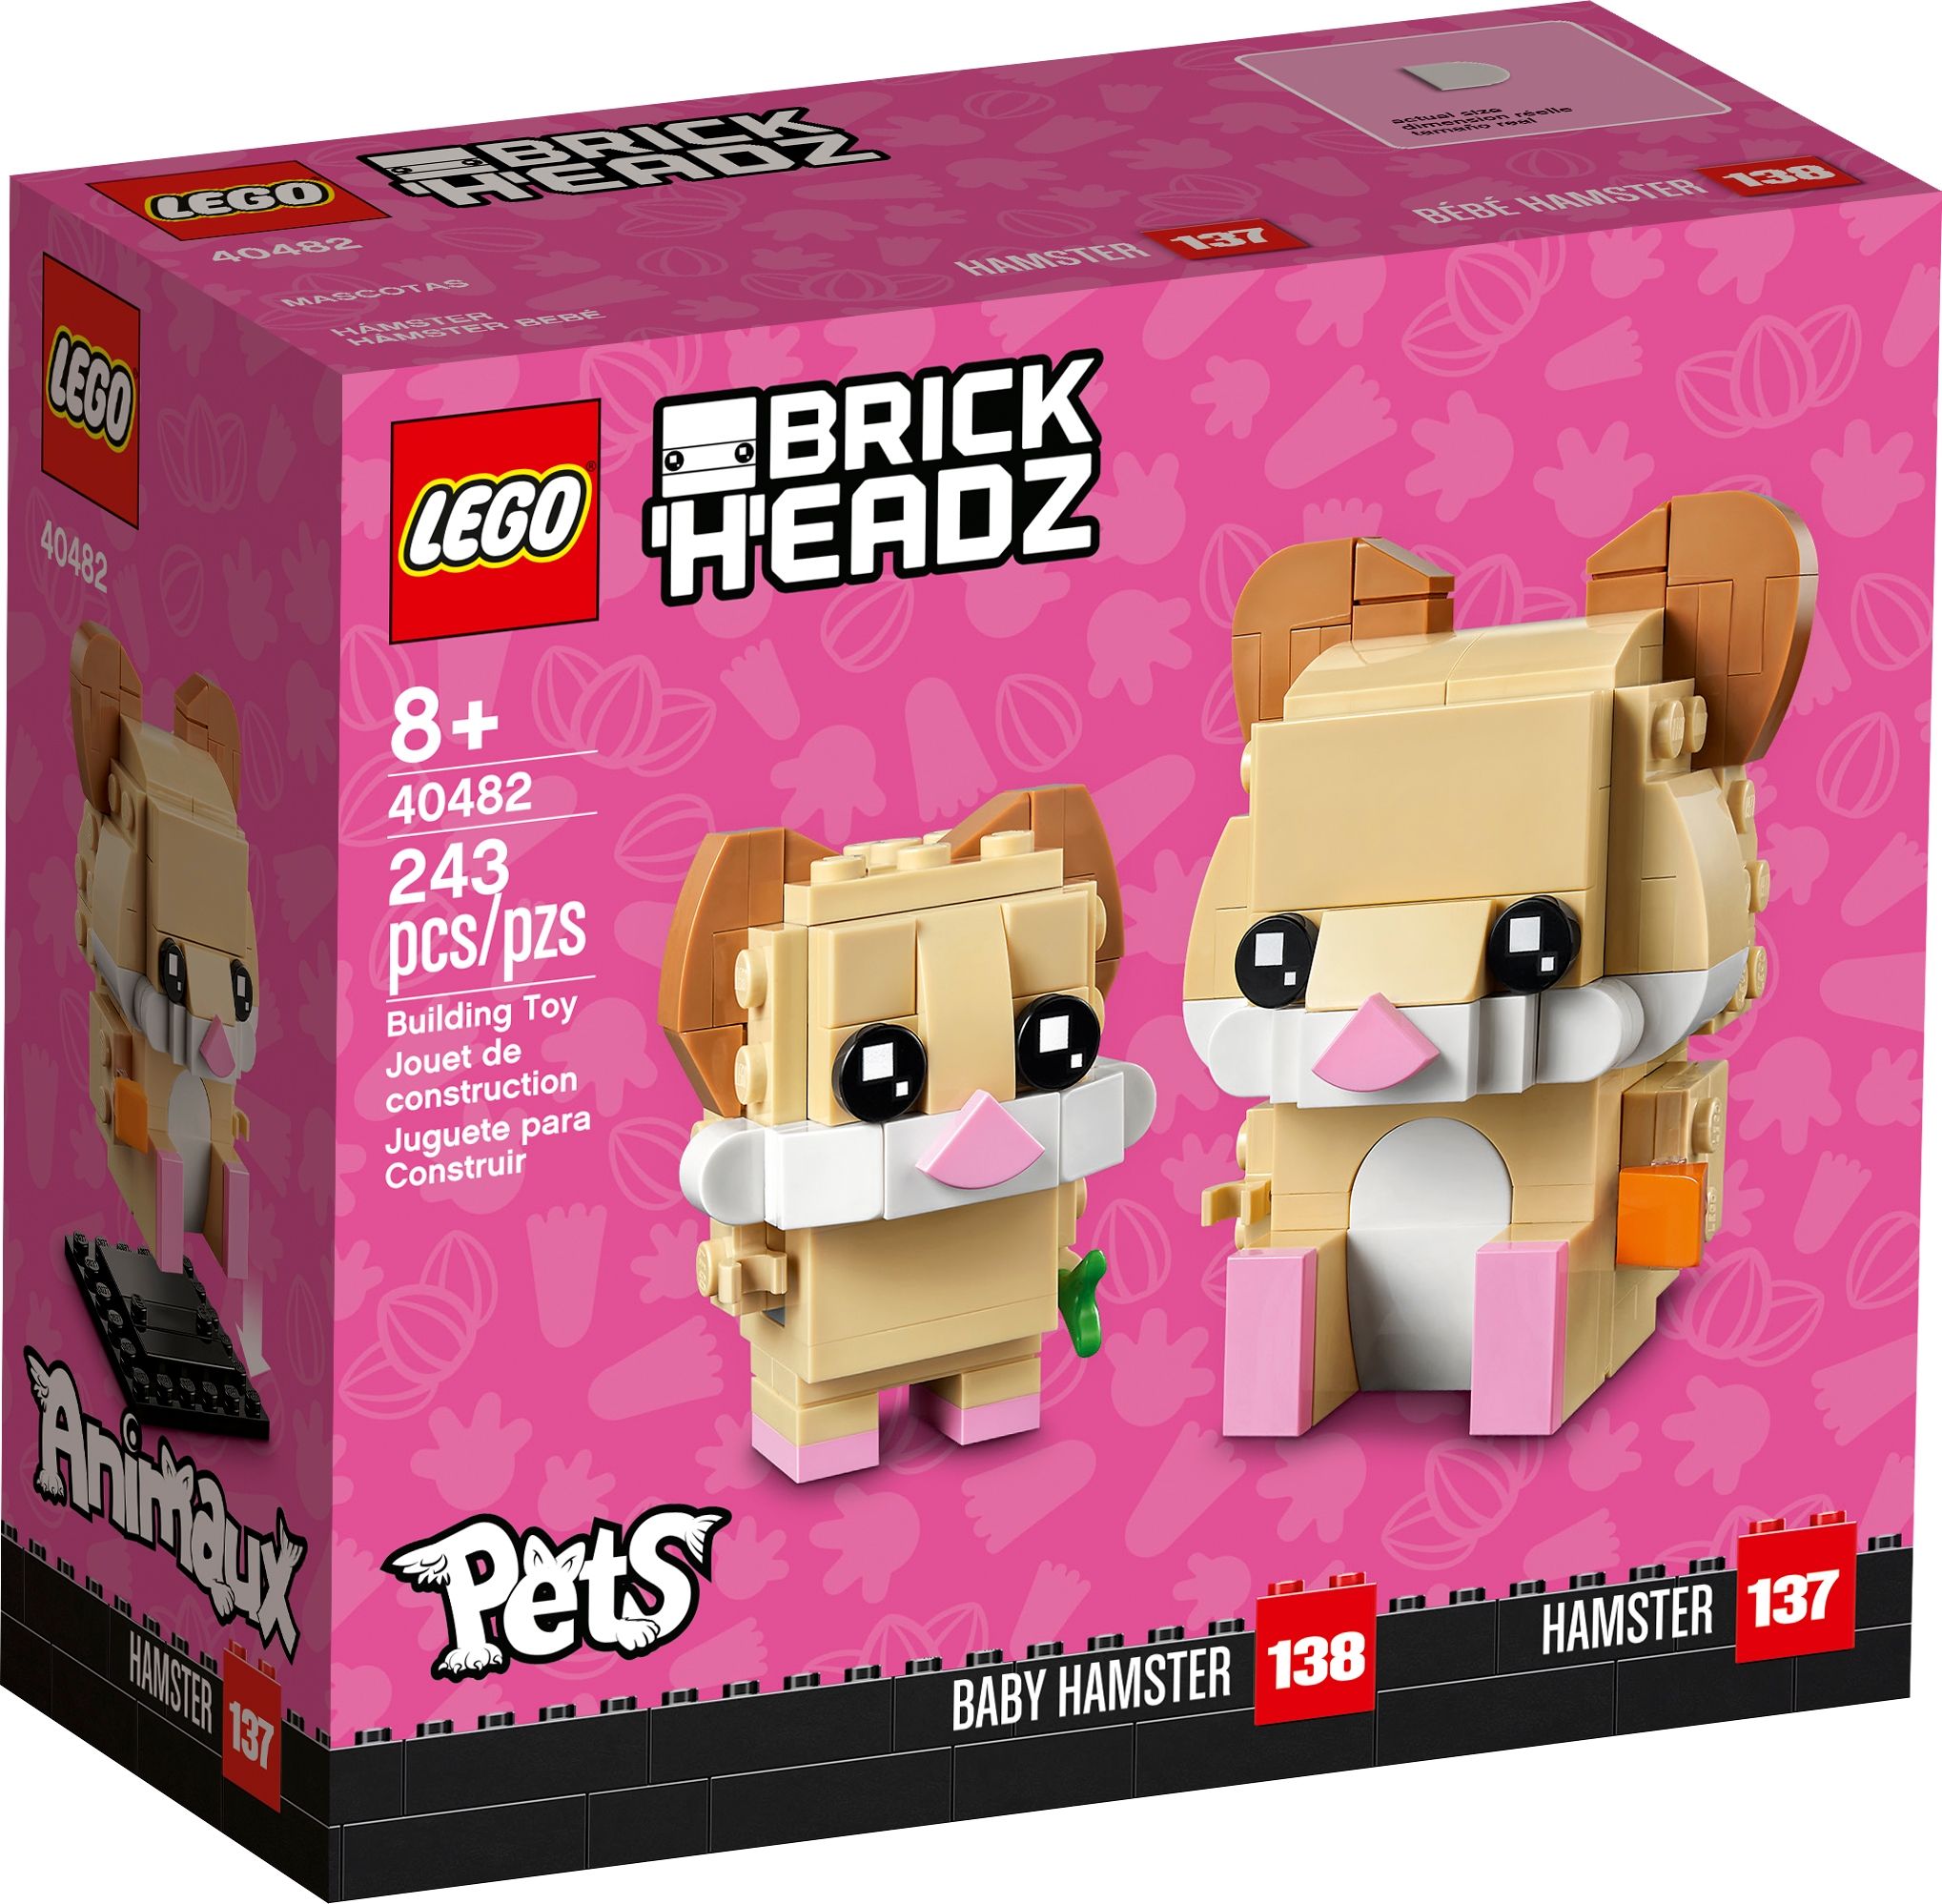 LEGO BrickHeadz 40482 Hamster LEGO_40482_alt1.jpg